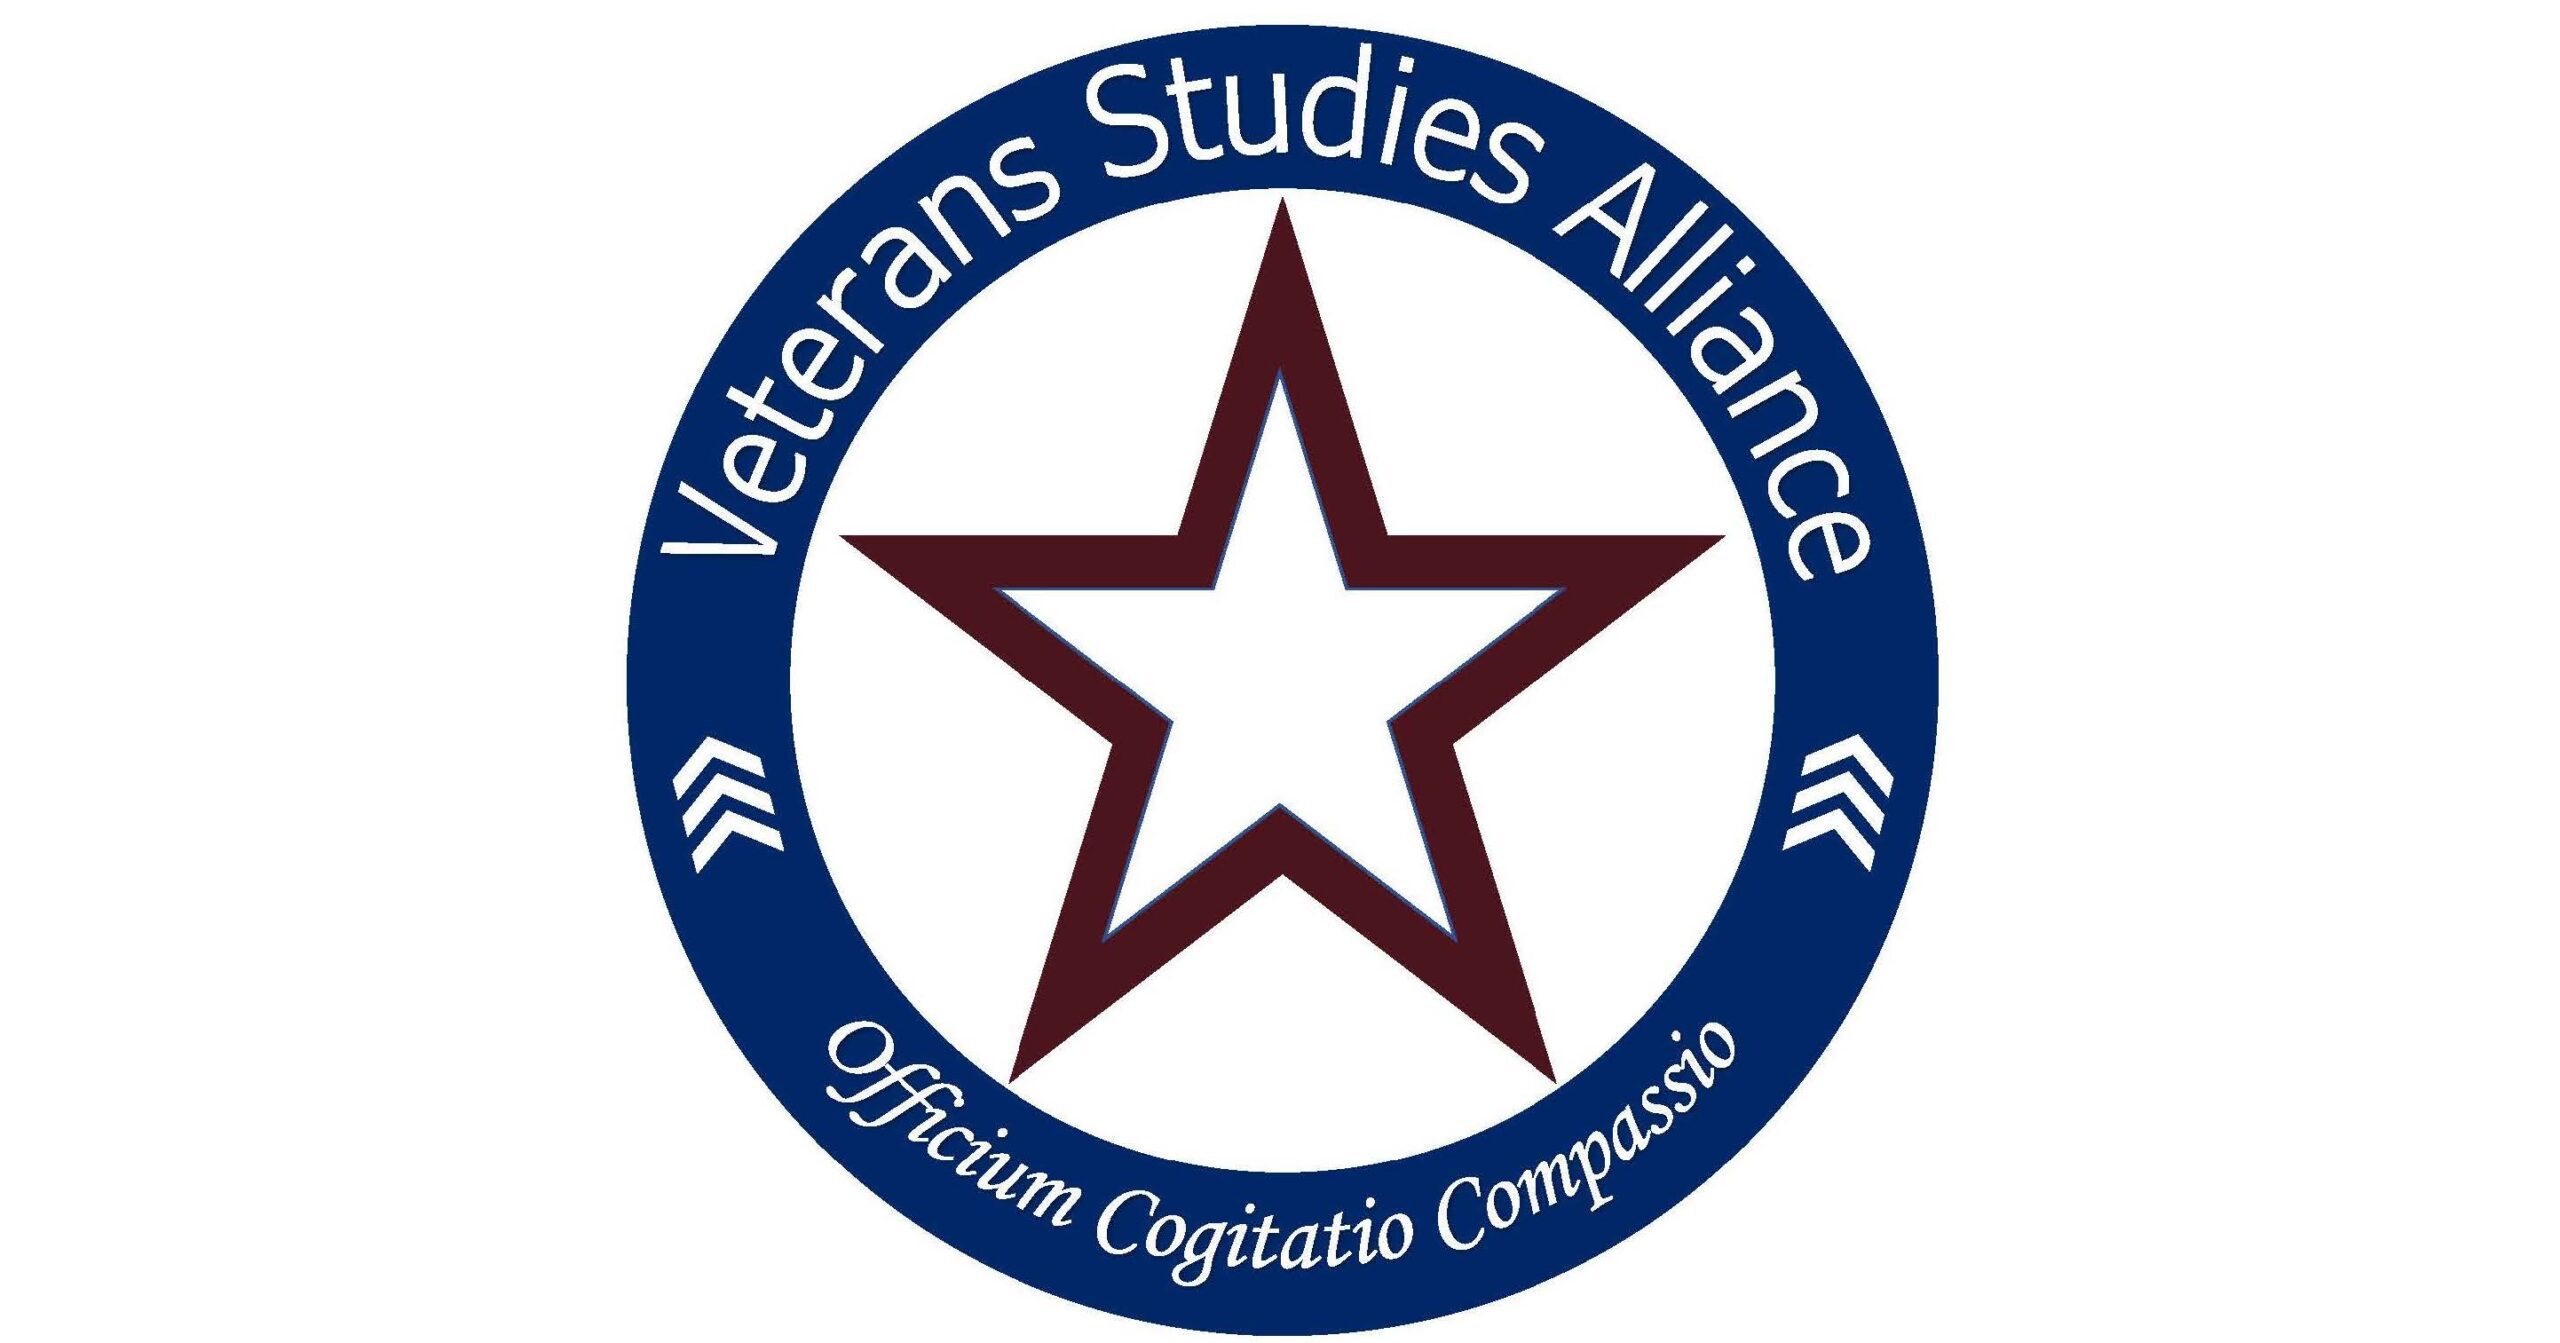 Veterans Studies Alliance Logo and Link